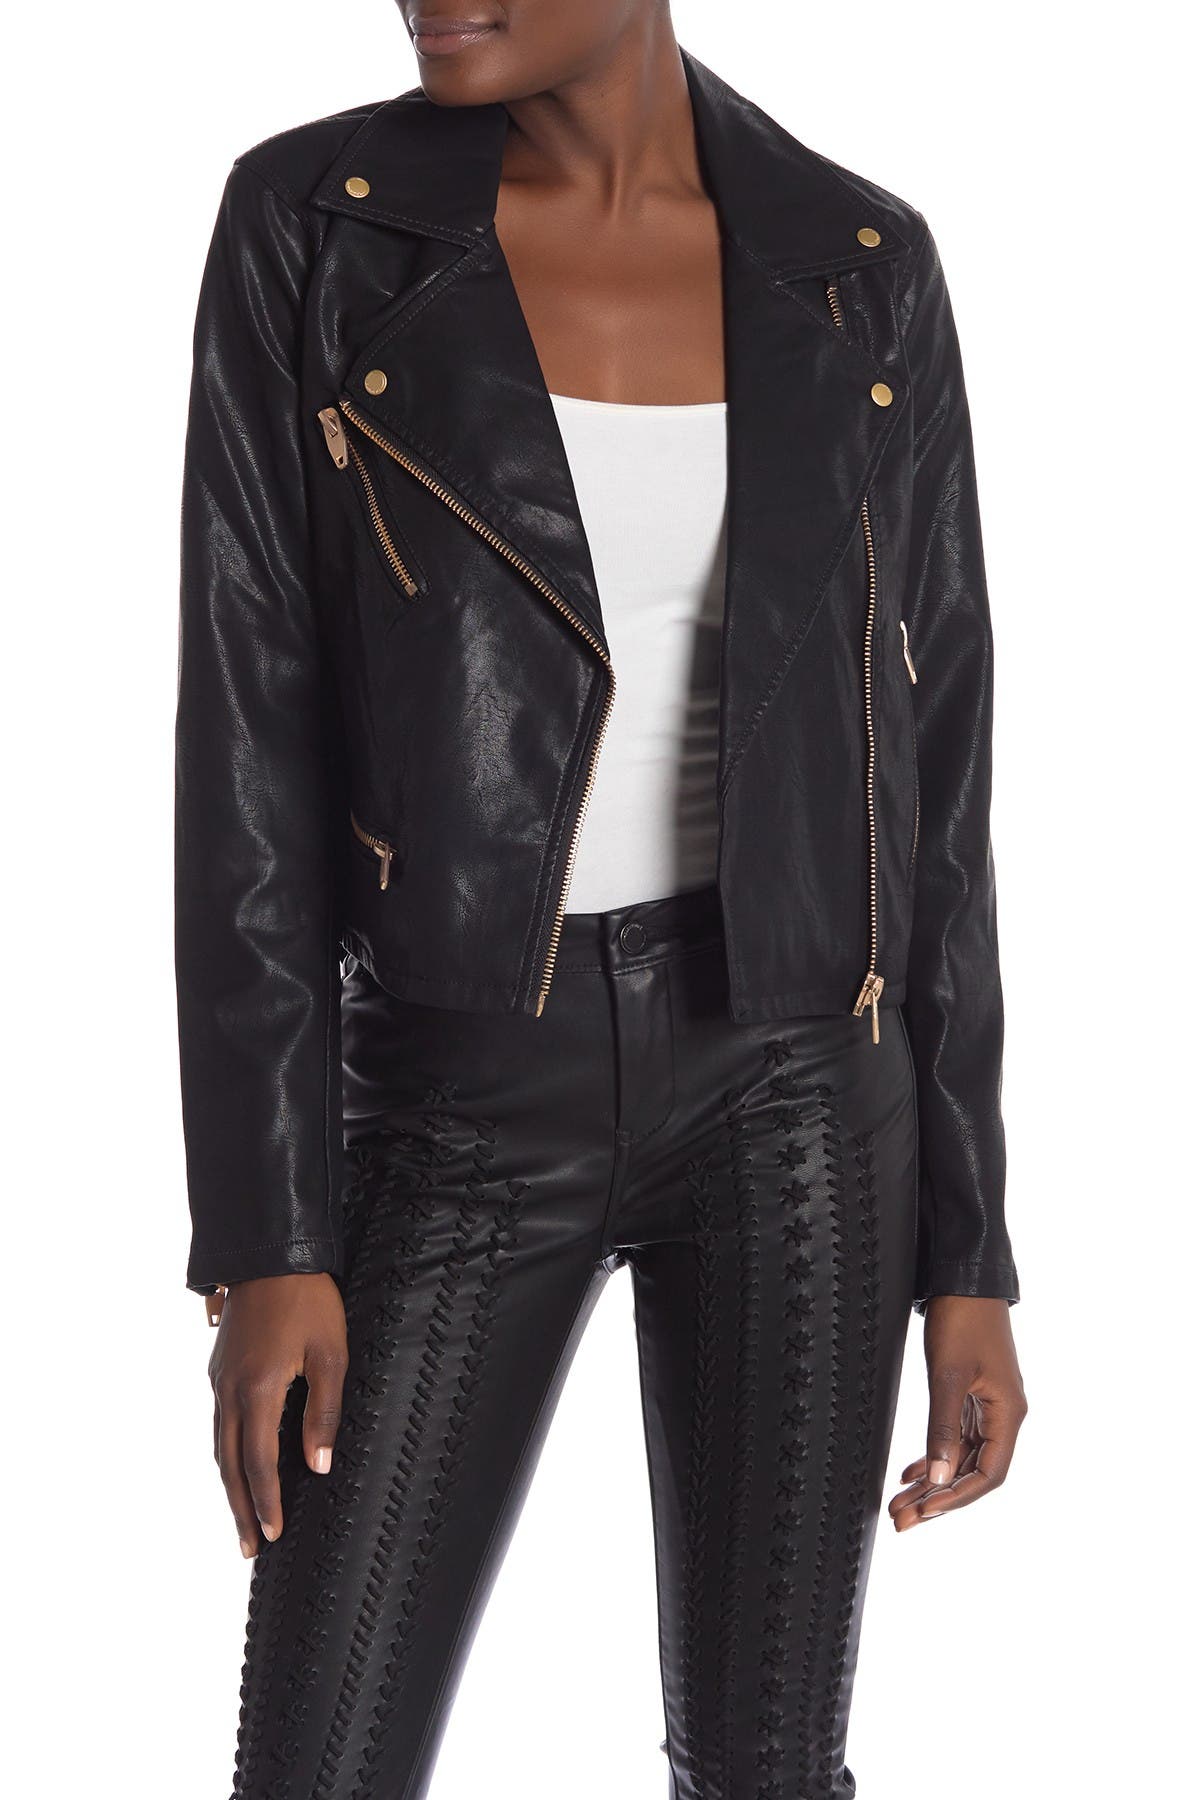 blanknyc denim faux leather jacket